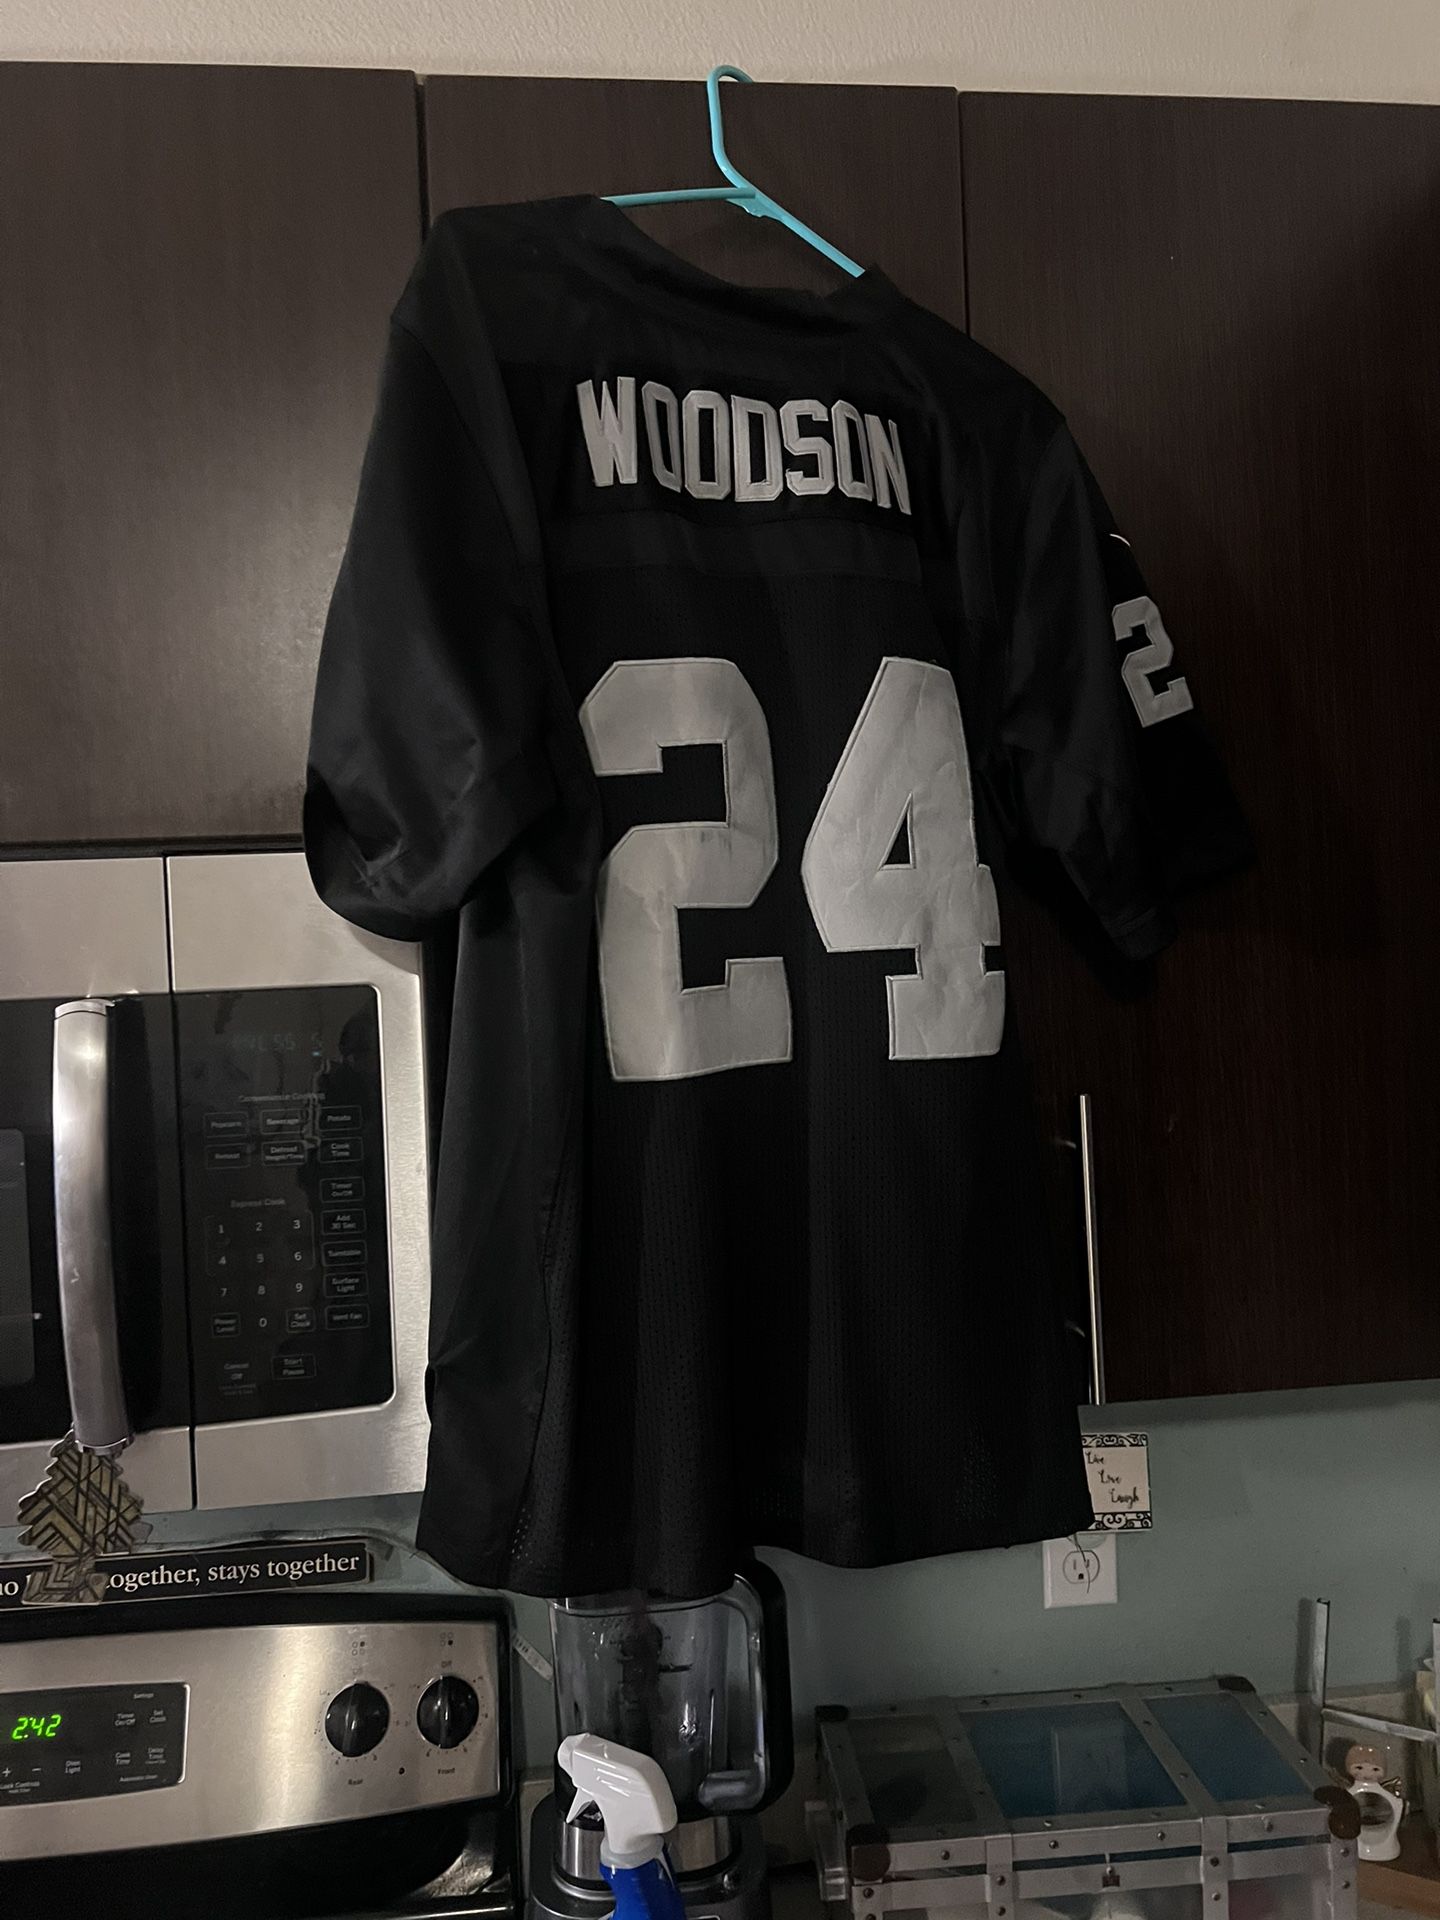 Raiders Woodson Jersey